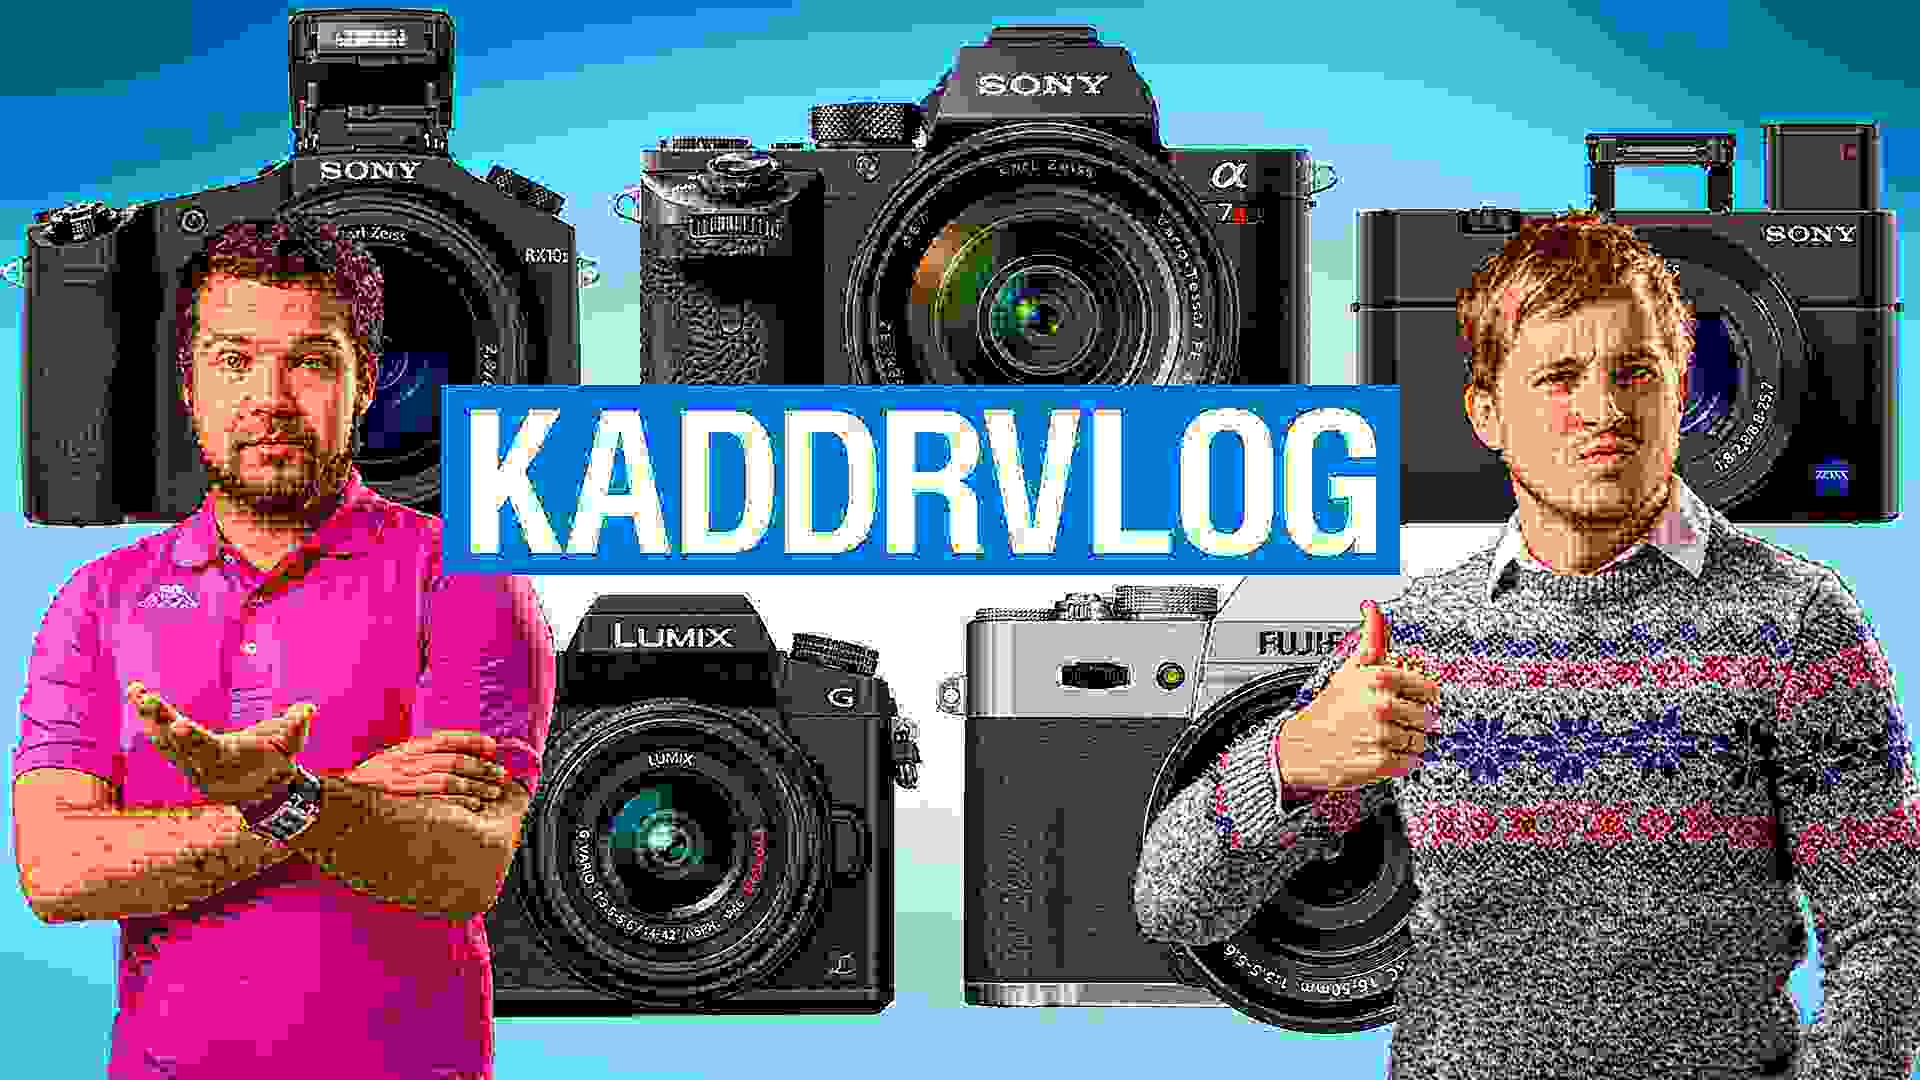 KaddrVLOG S03E01 — Sony A7R II, RX10 II, RX100 IV, Fuji X-T10, Panasonic G7, Canon 50mm F1.8 STM, Adobe Lightroom 6/CC, Мобильная фотография как искусство